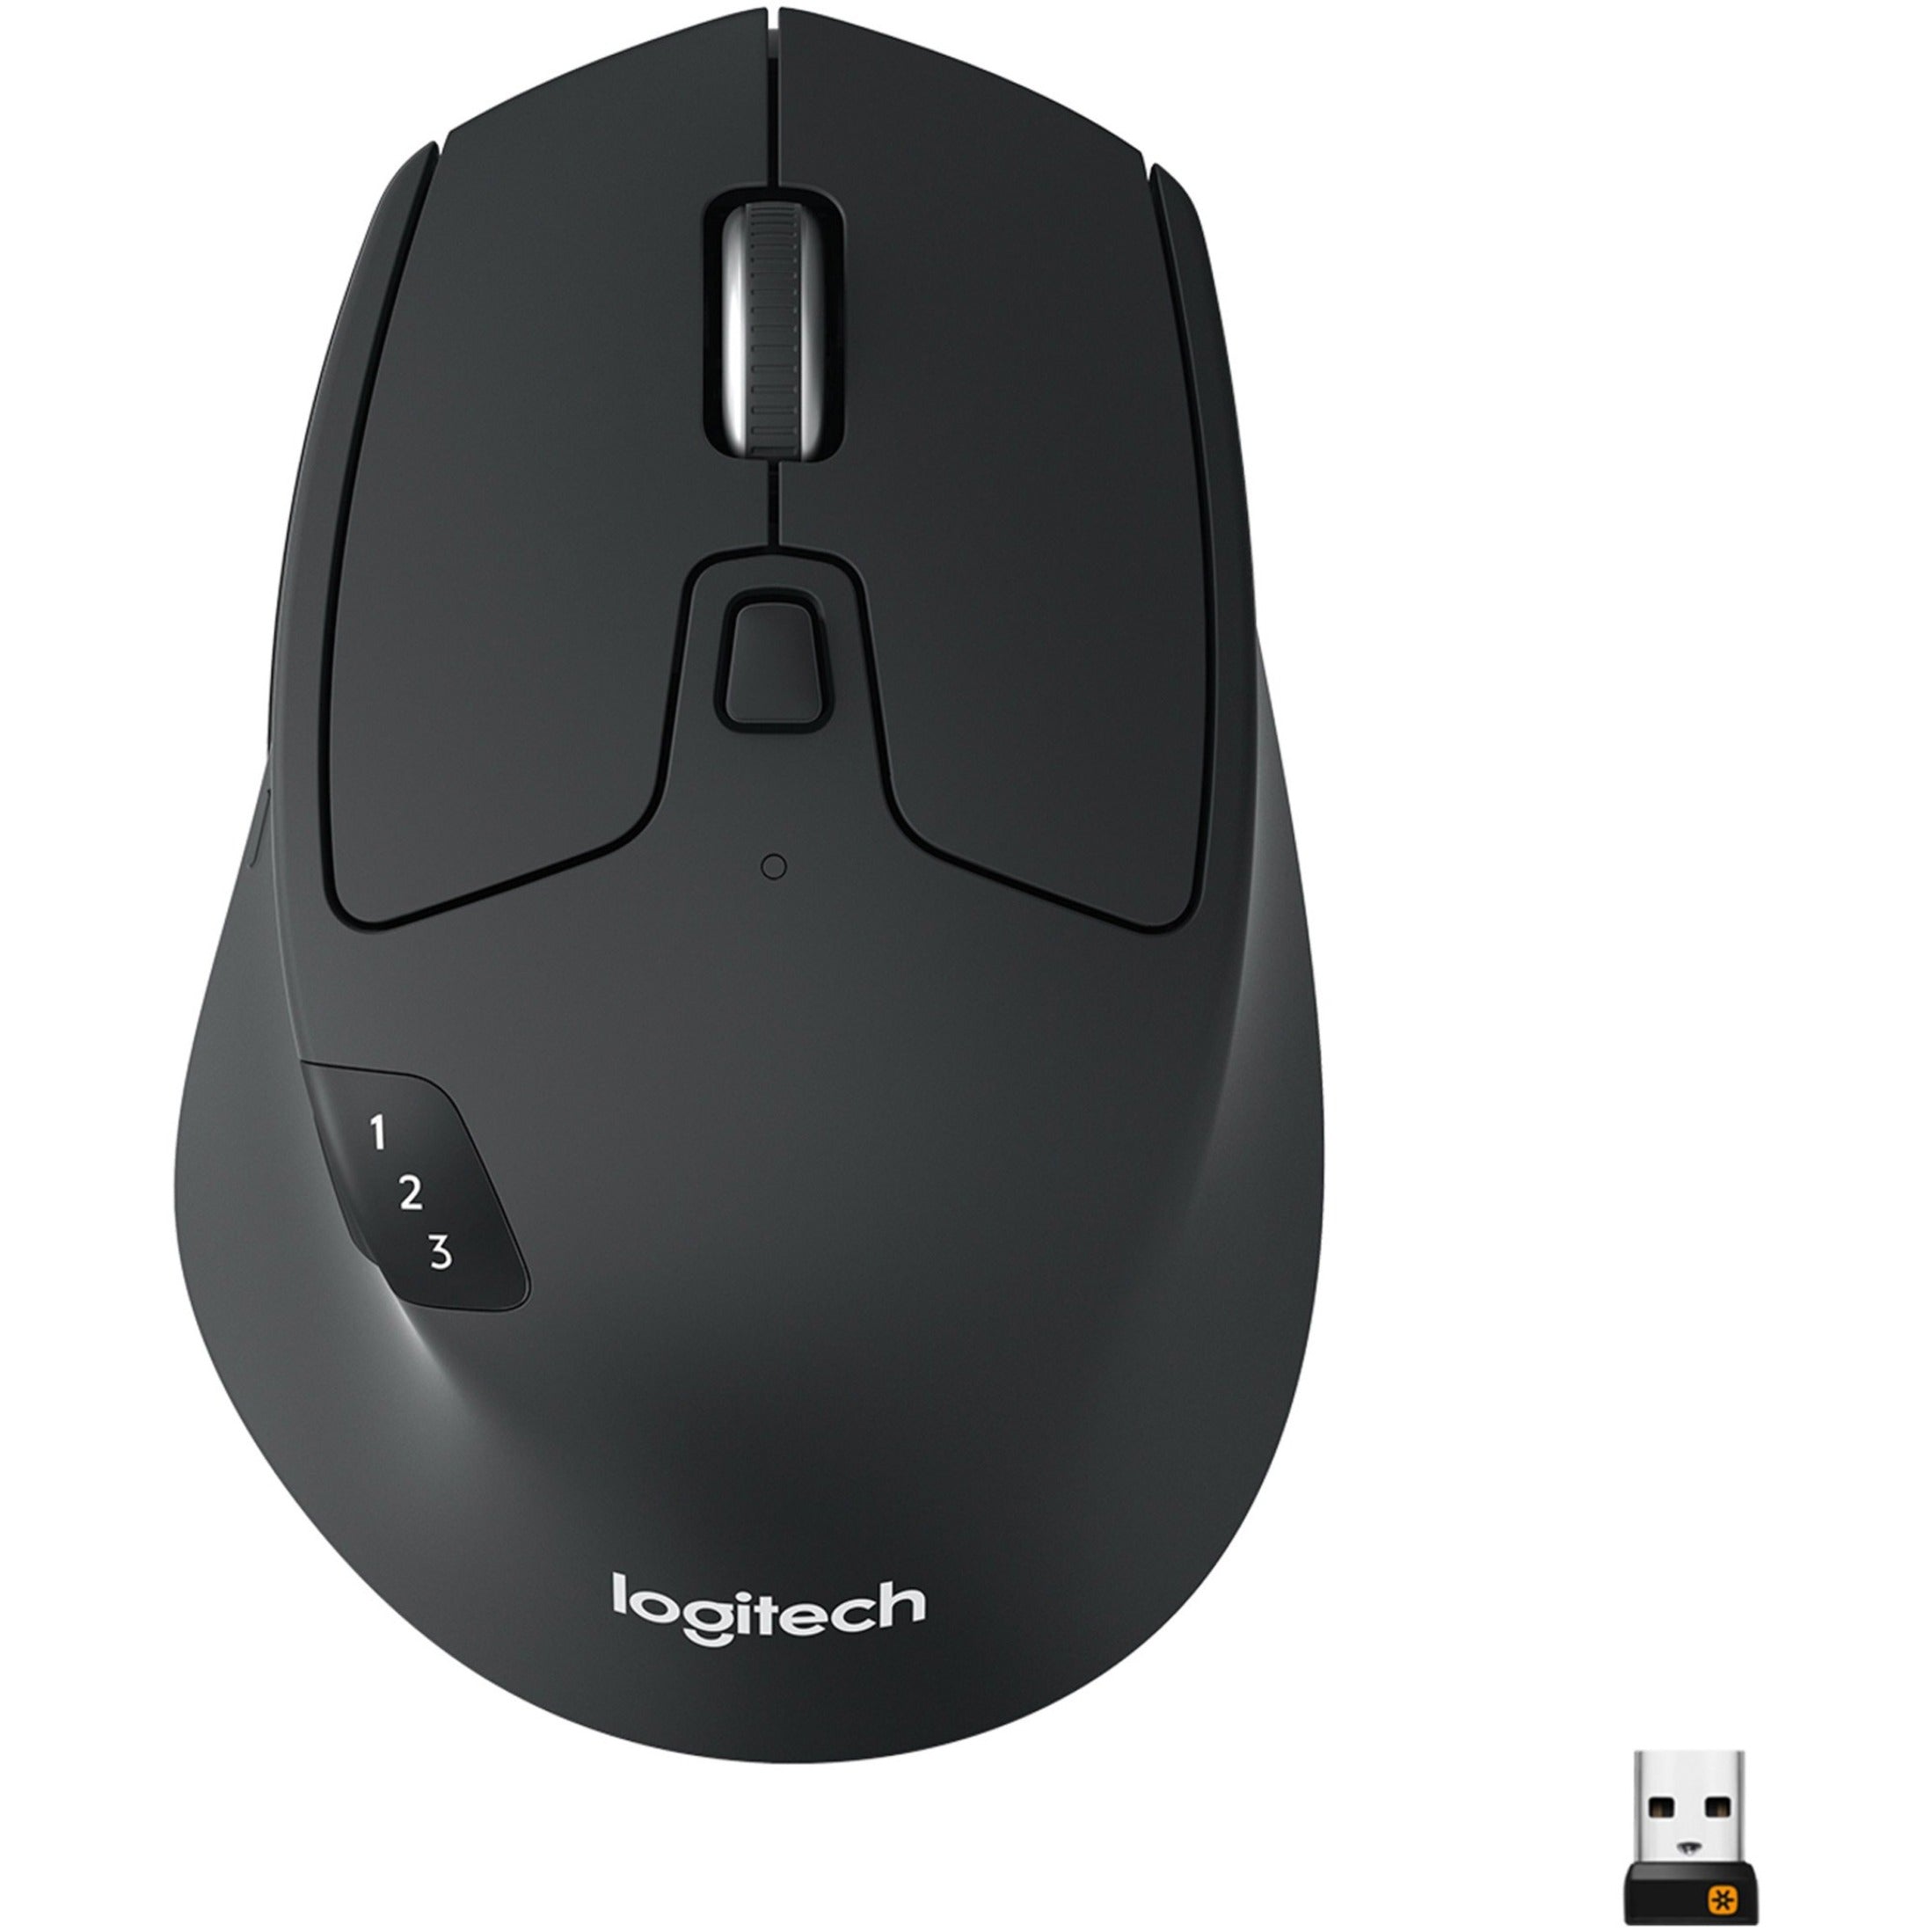 Logitech 910-004790 M720 Triathlon Multi-device Wireless Mouse, 7 Buttons, Tilt Wheel, 1000 dpi